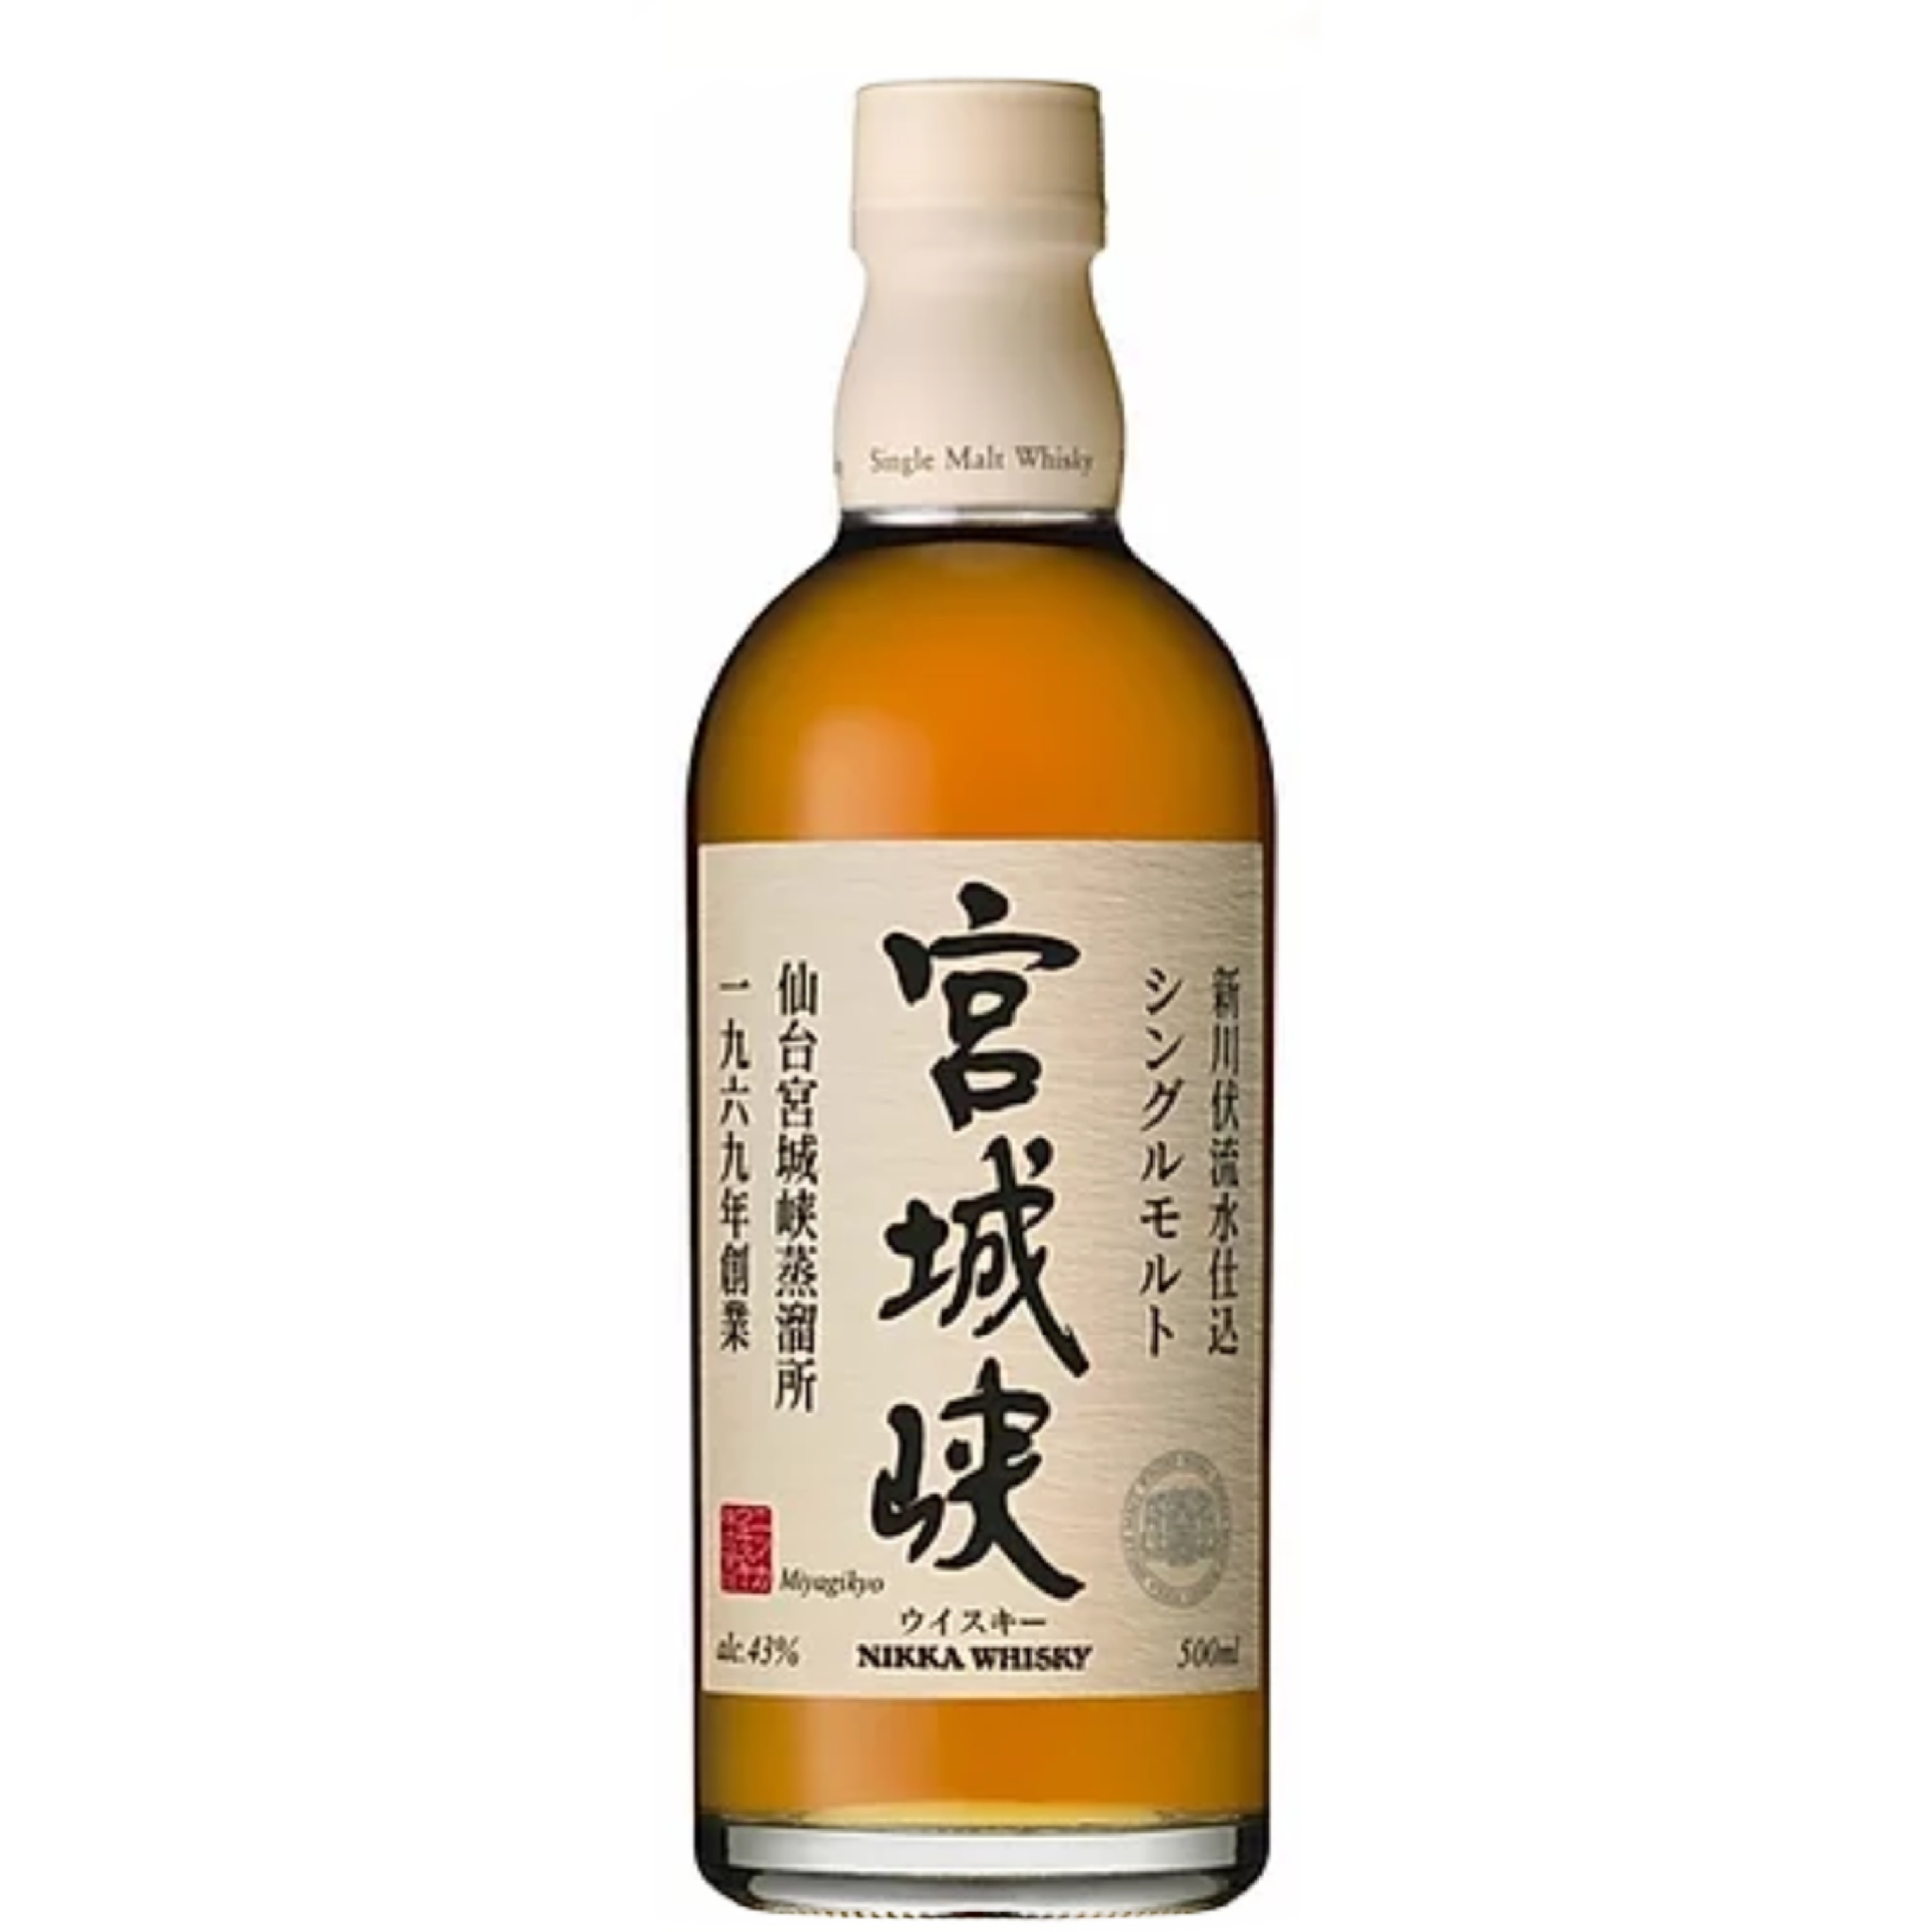 余市Yoichi Single Malt Whisky 700ml